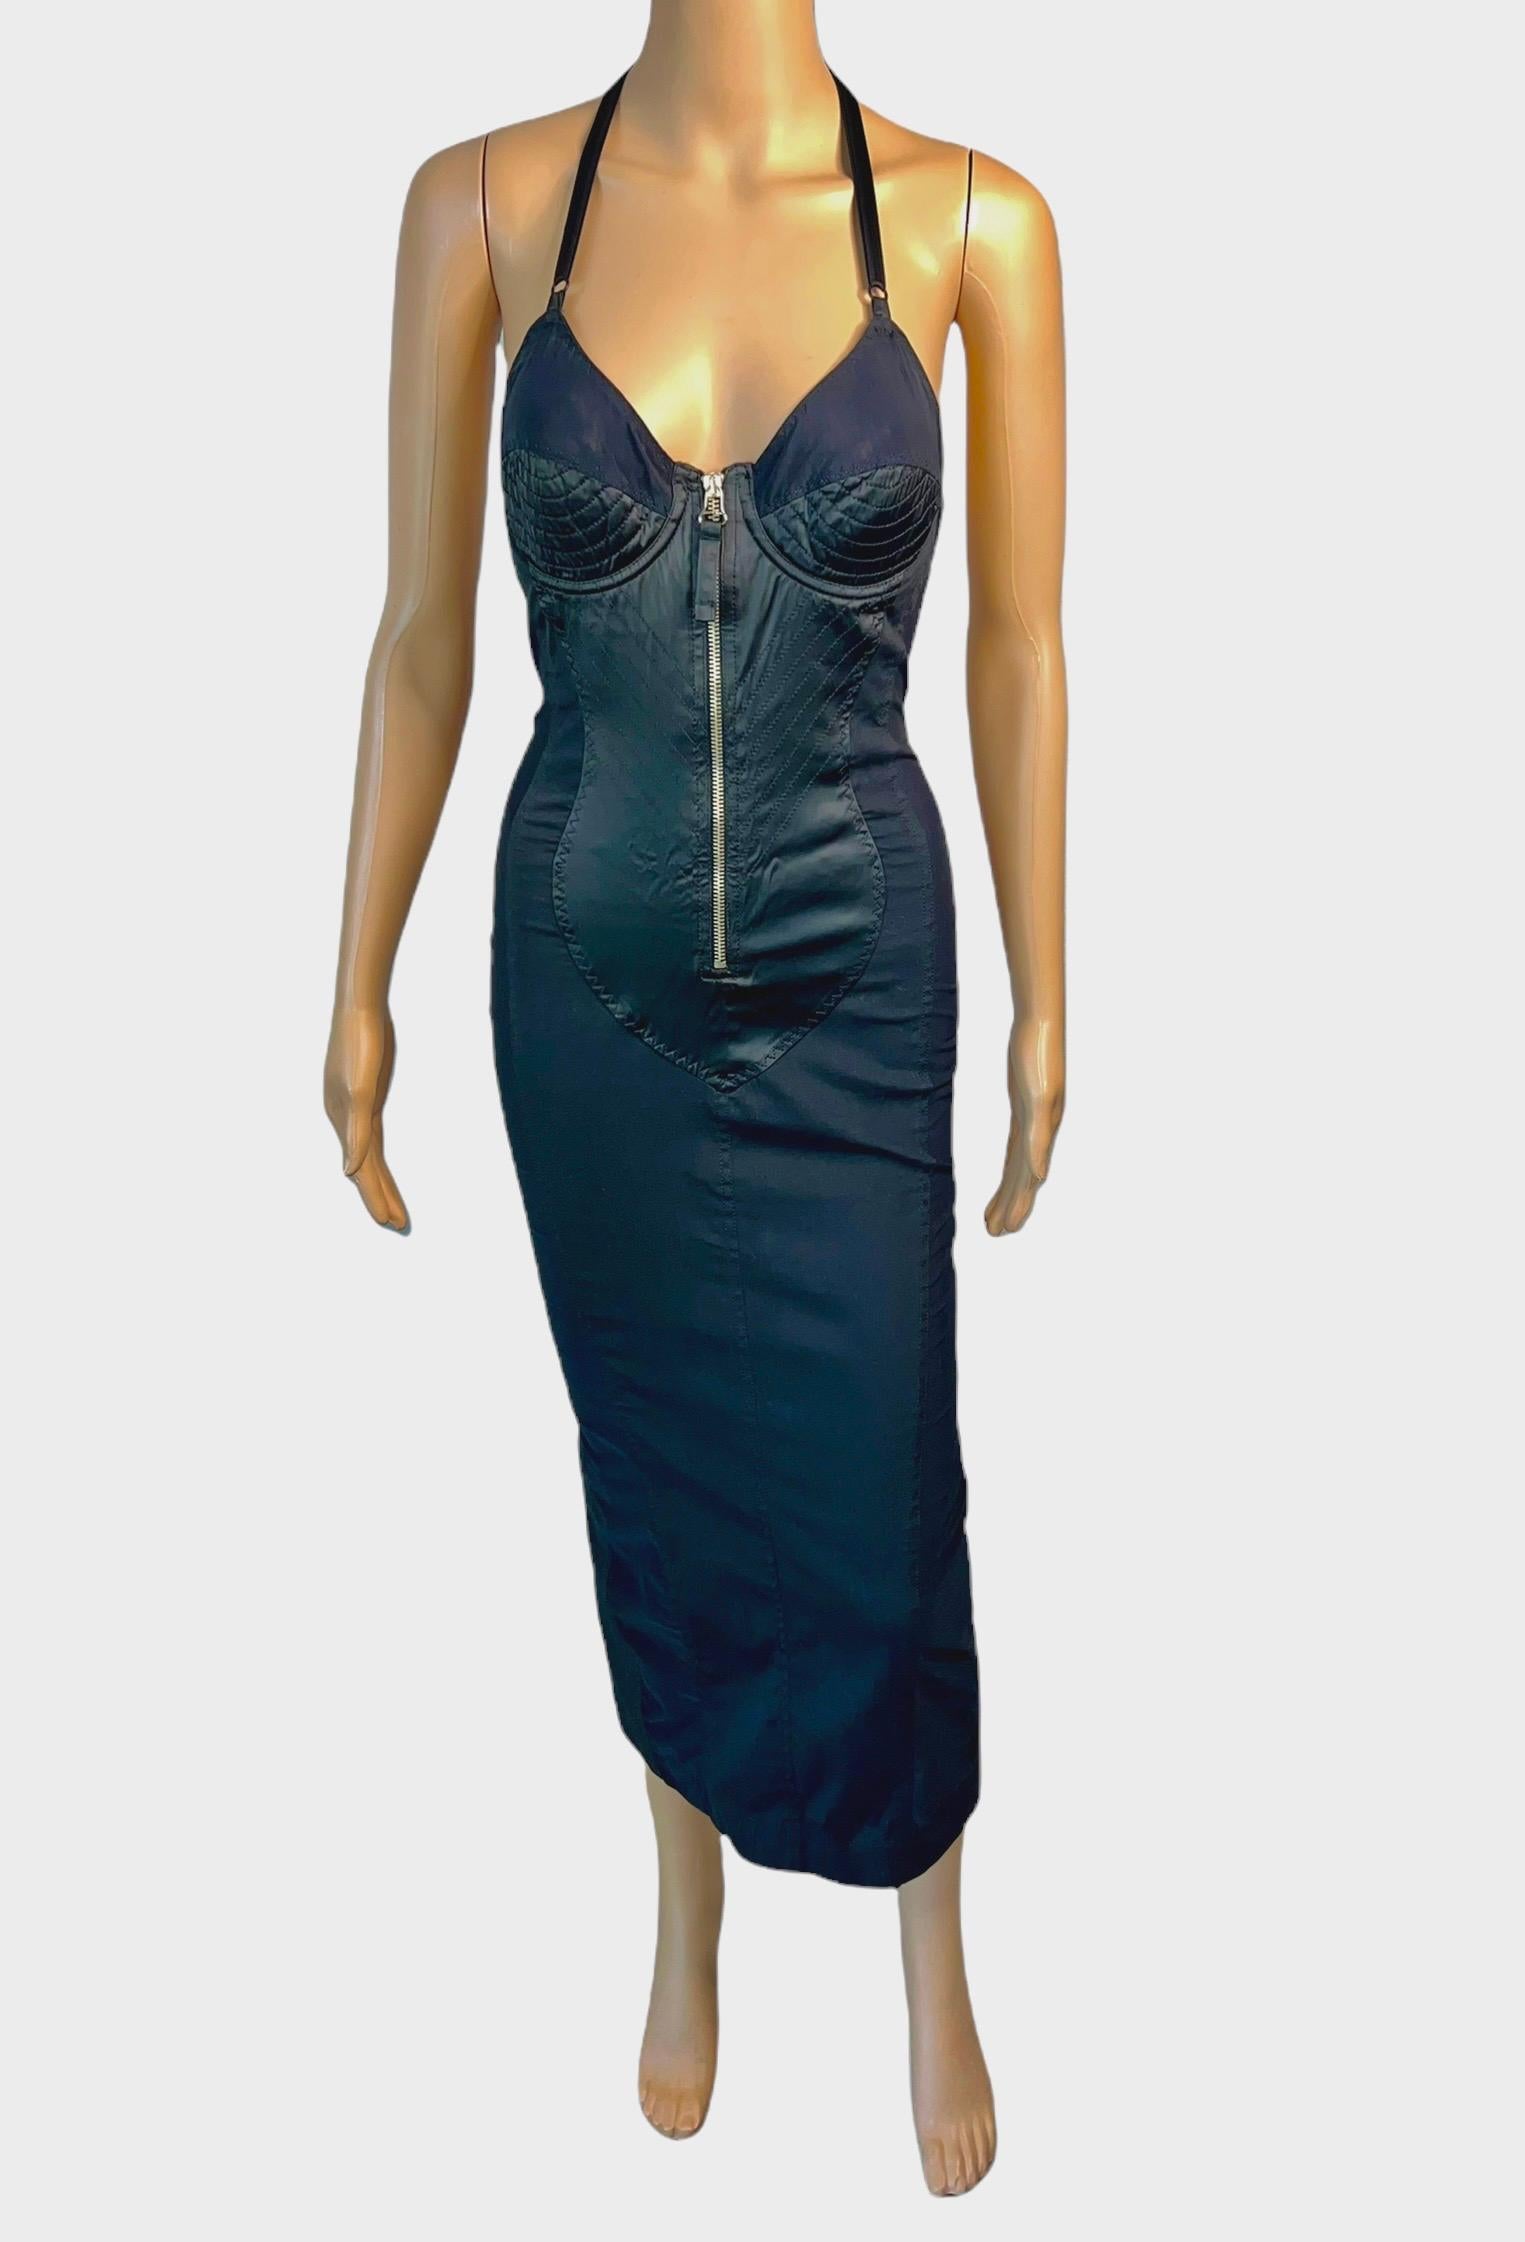 Jean Paul Gaultier 1990's Vintage Cone Bra Corset Bondage Black Evening Dress 6